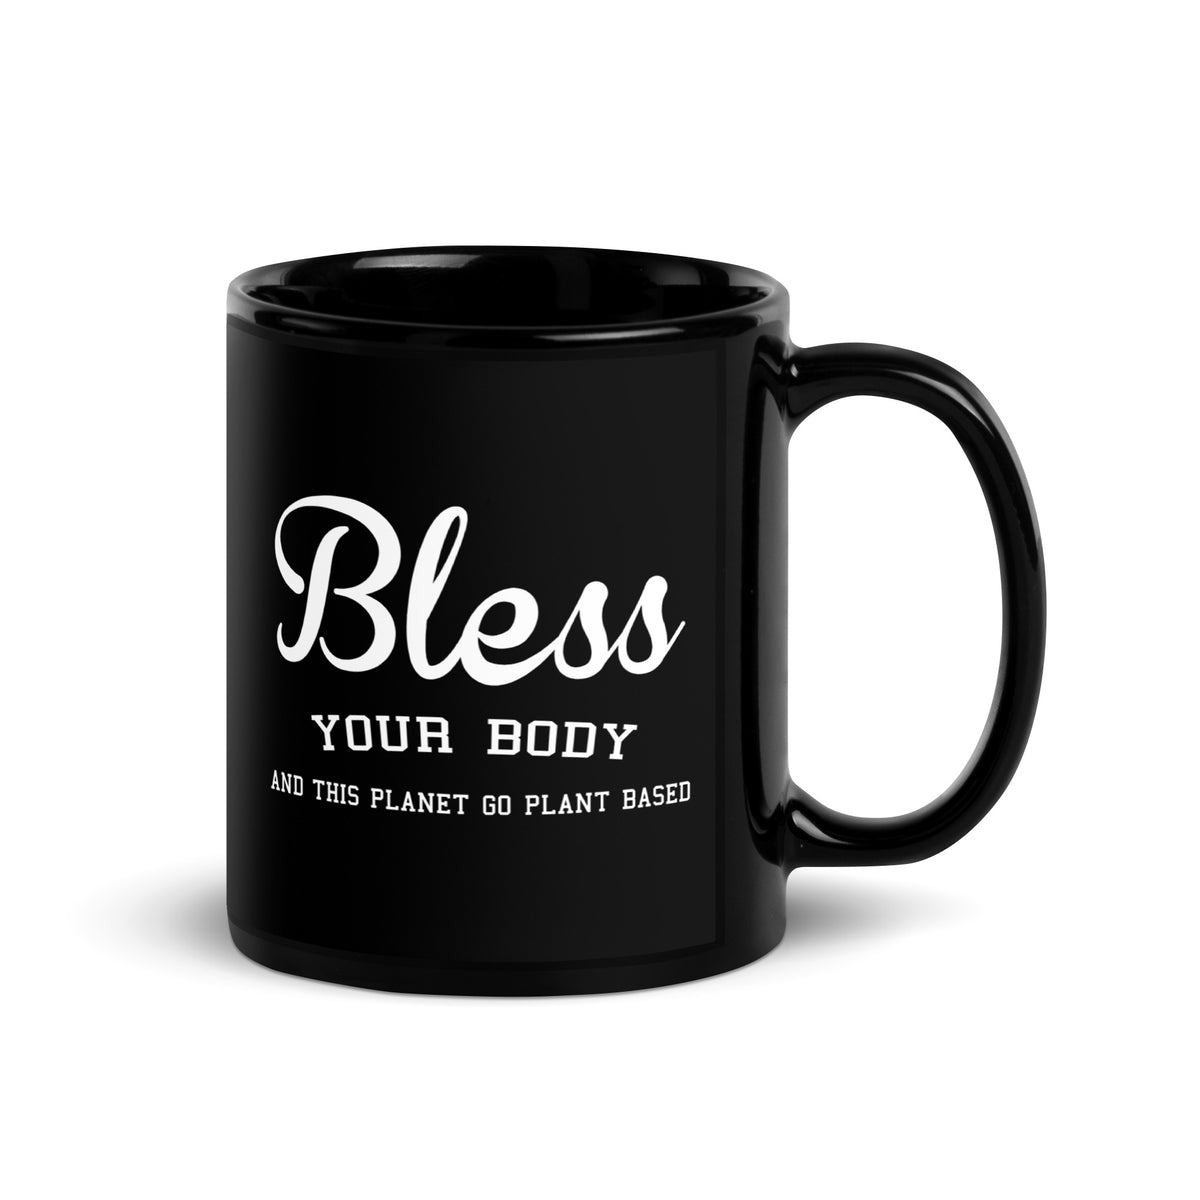 BLESS YOUR BODY Black Glossy Mug